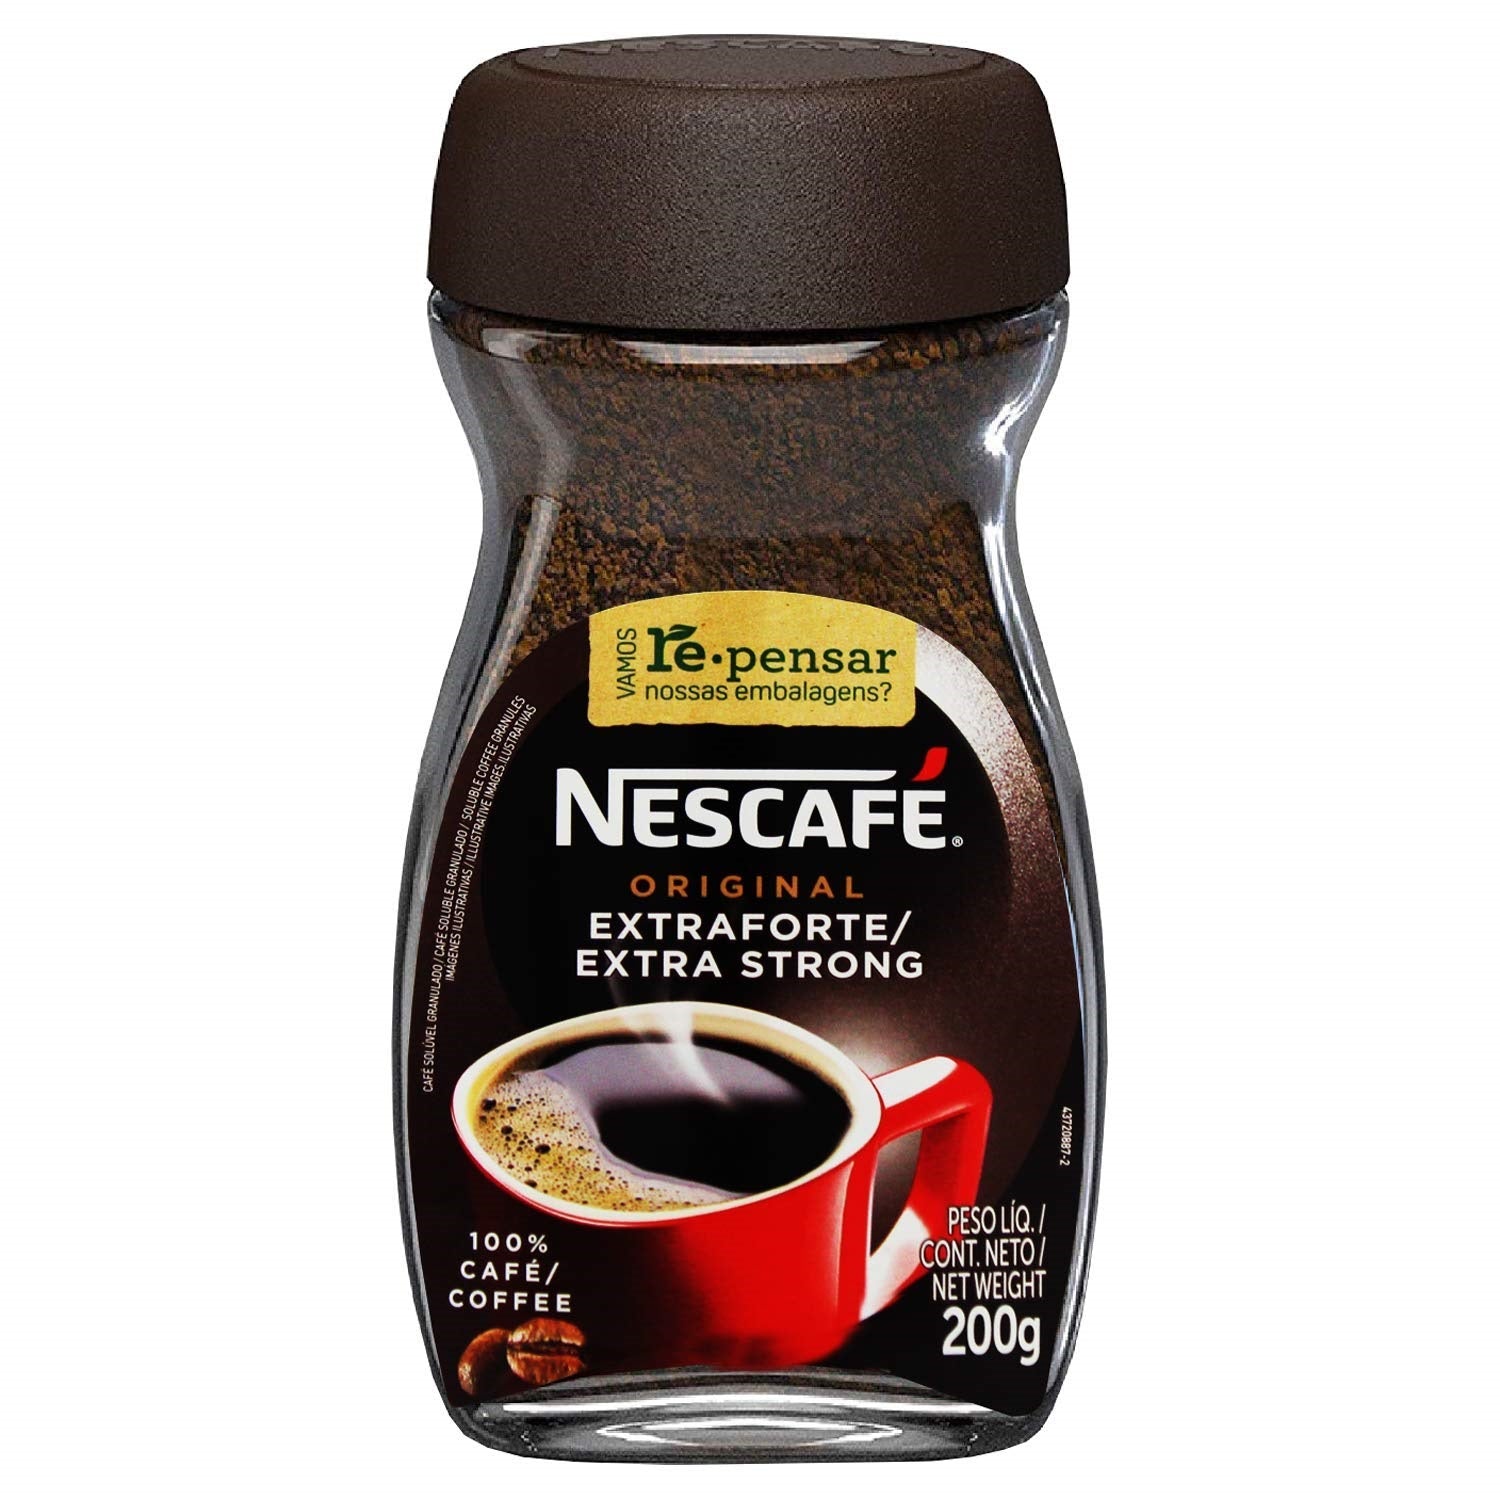 Nescafe Gold Cappuccino Unsweetened Taste Coffee 8 Sachets - 113.6g